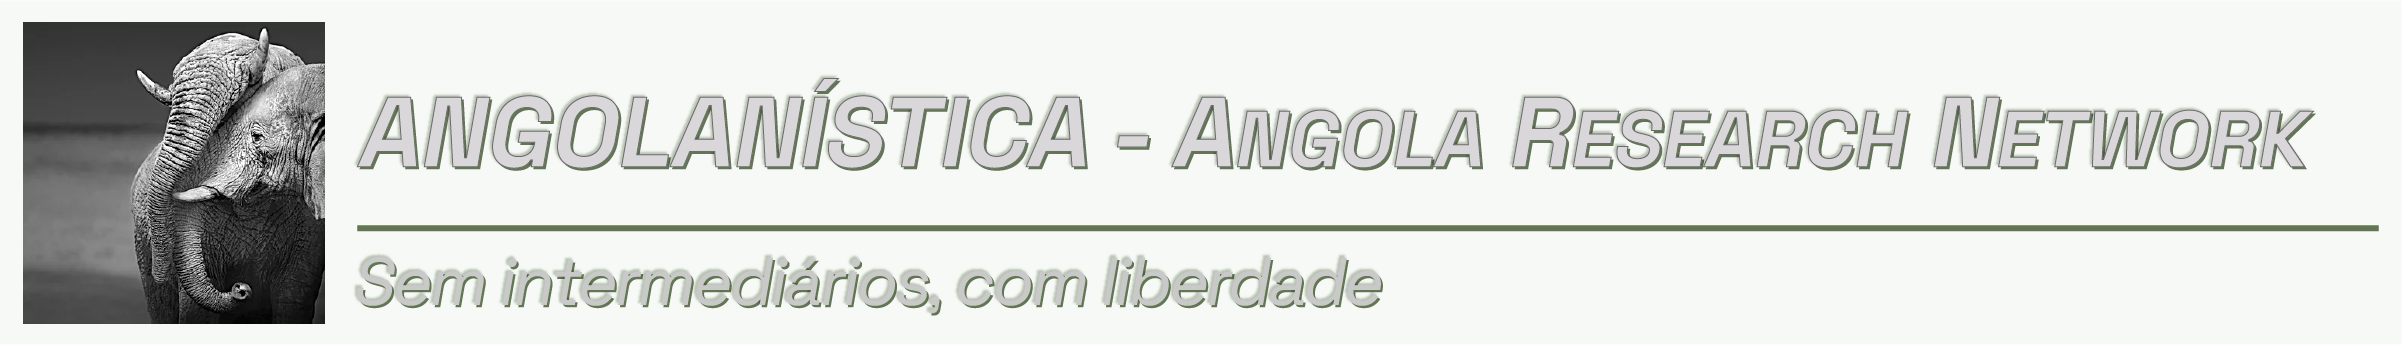 ANGOLANÍSTICA-ANGOLA RESEARCH NETWORK